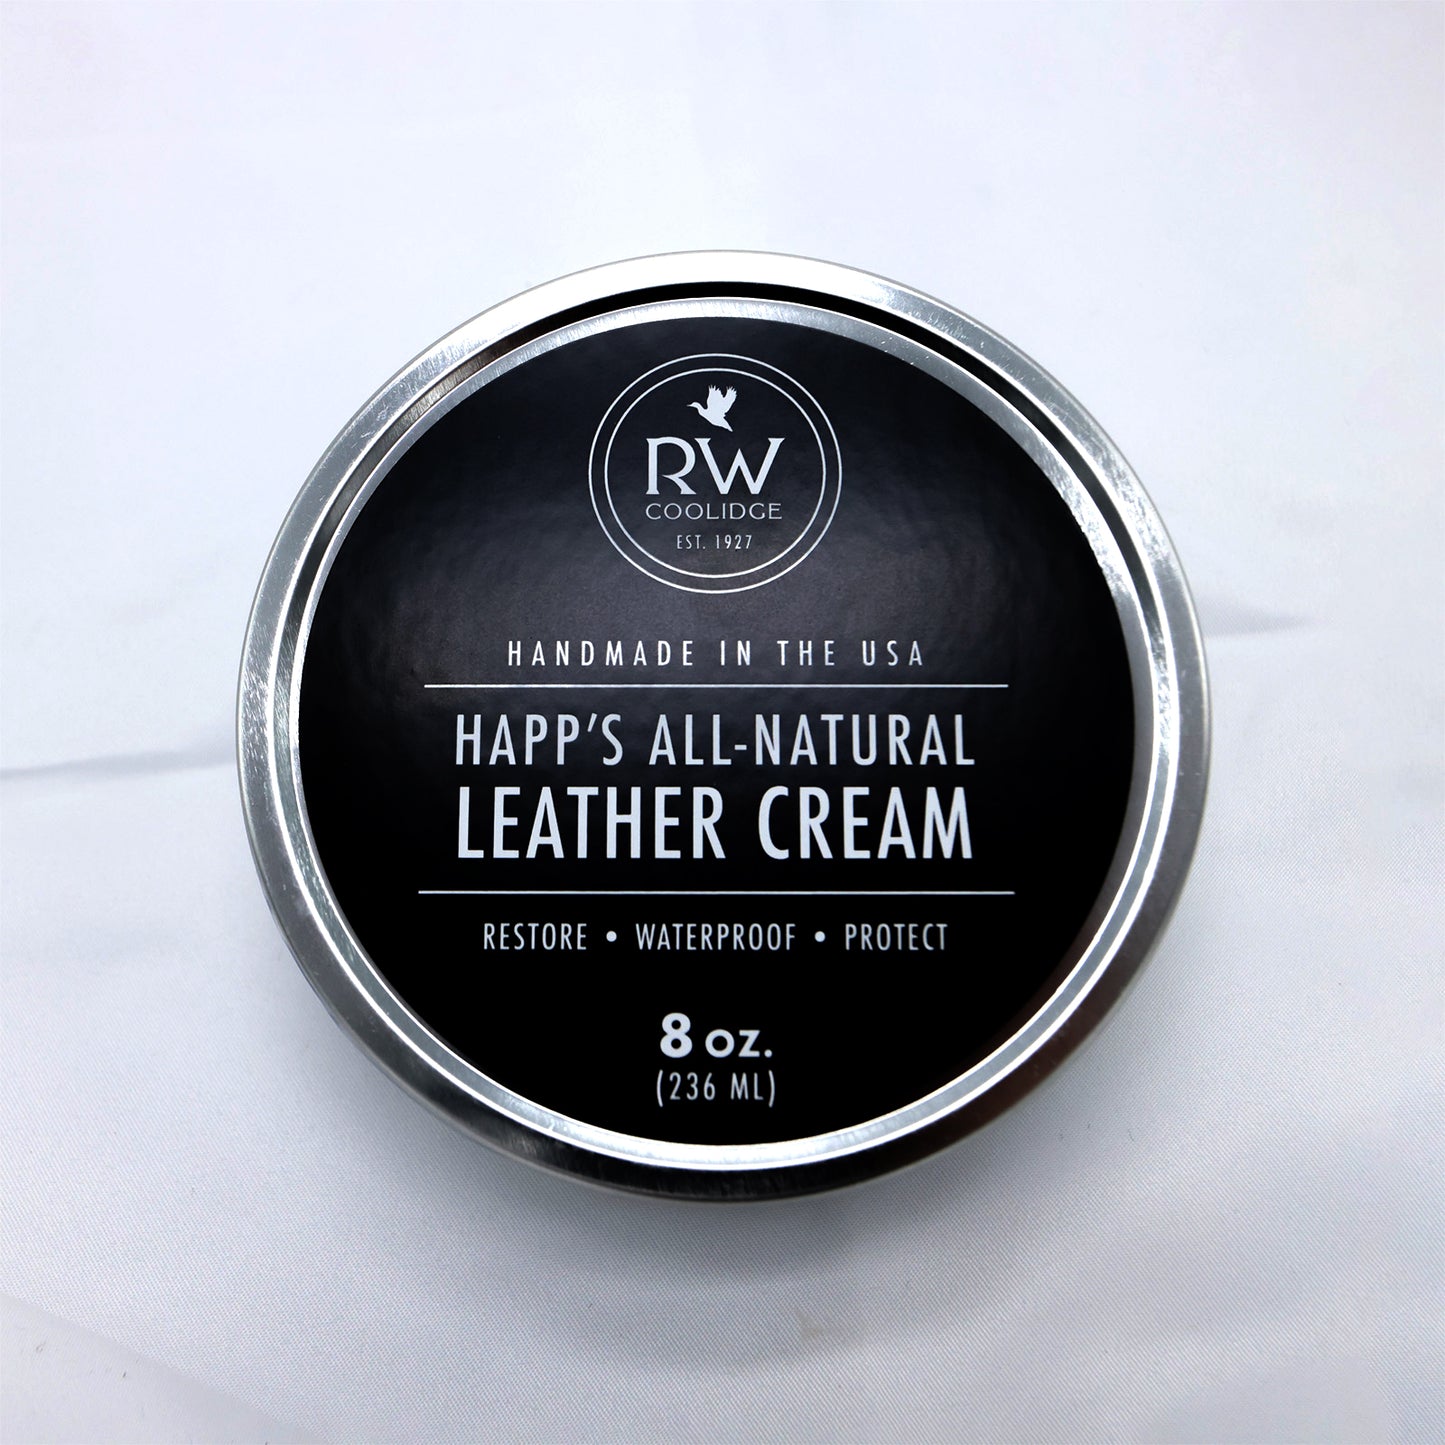 Happ's All-Natural Leather Cream